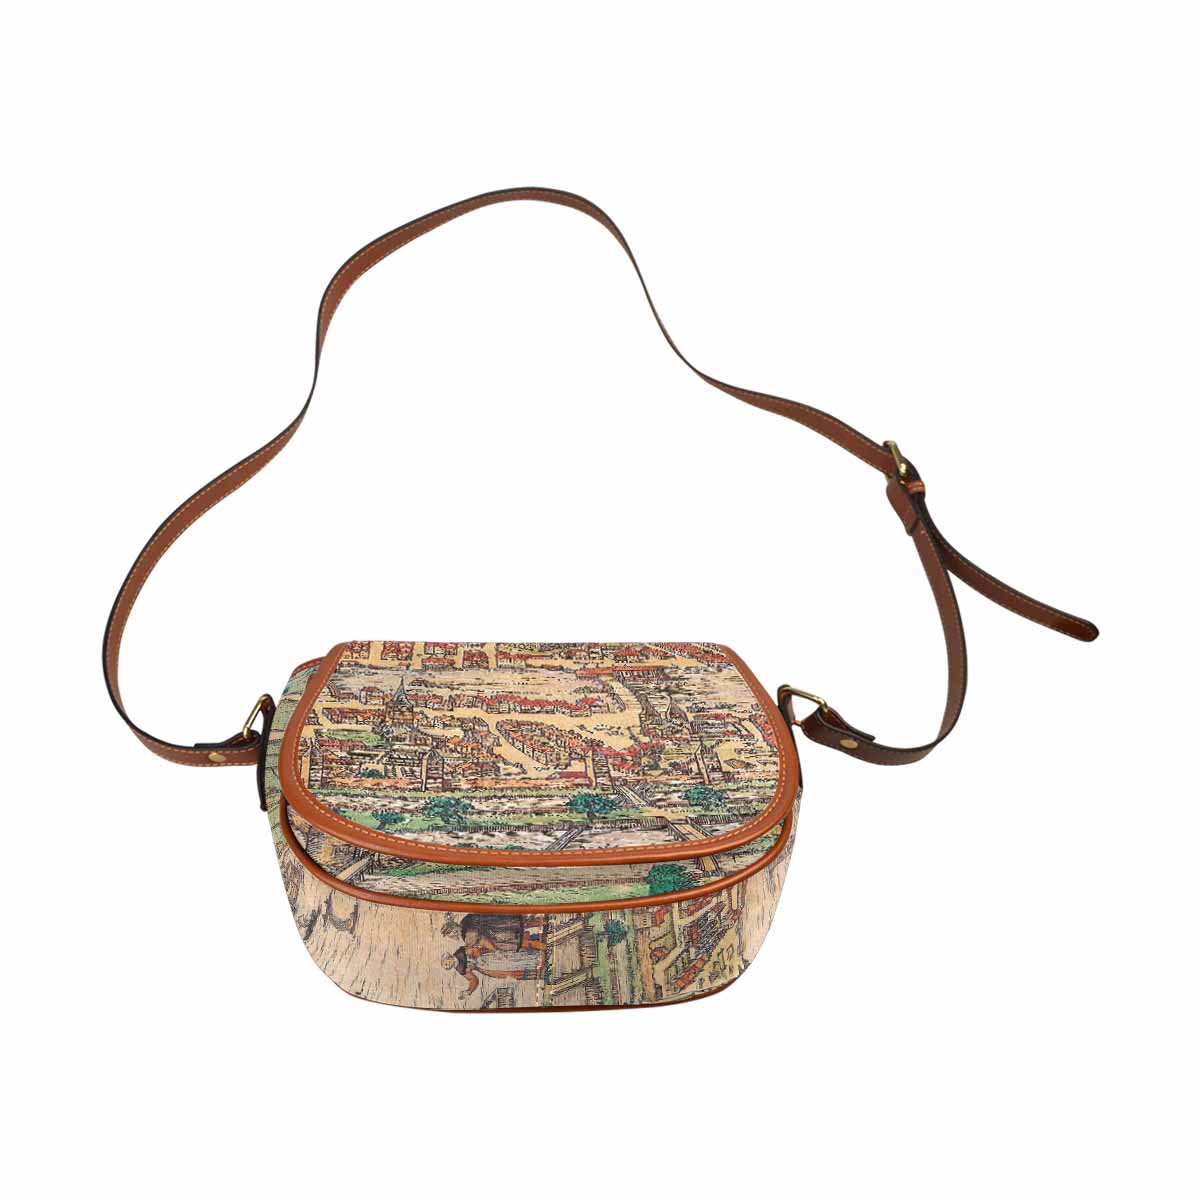 Antique Map design Handbag, saddle bag, Design 24